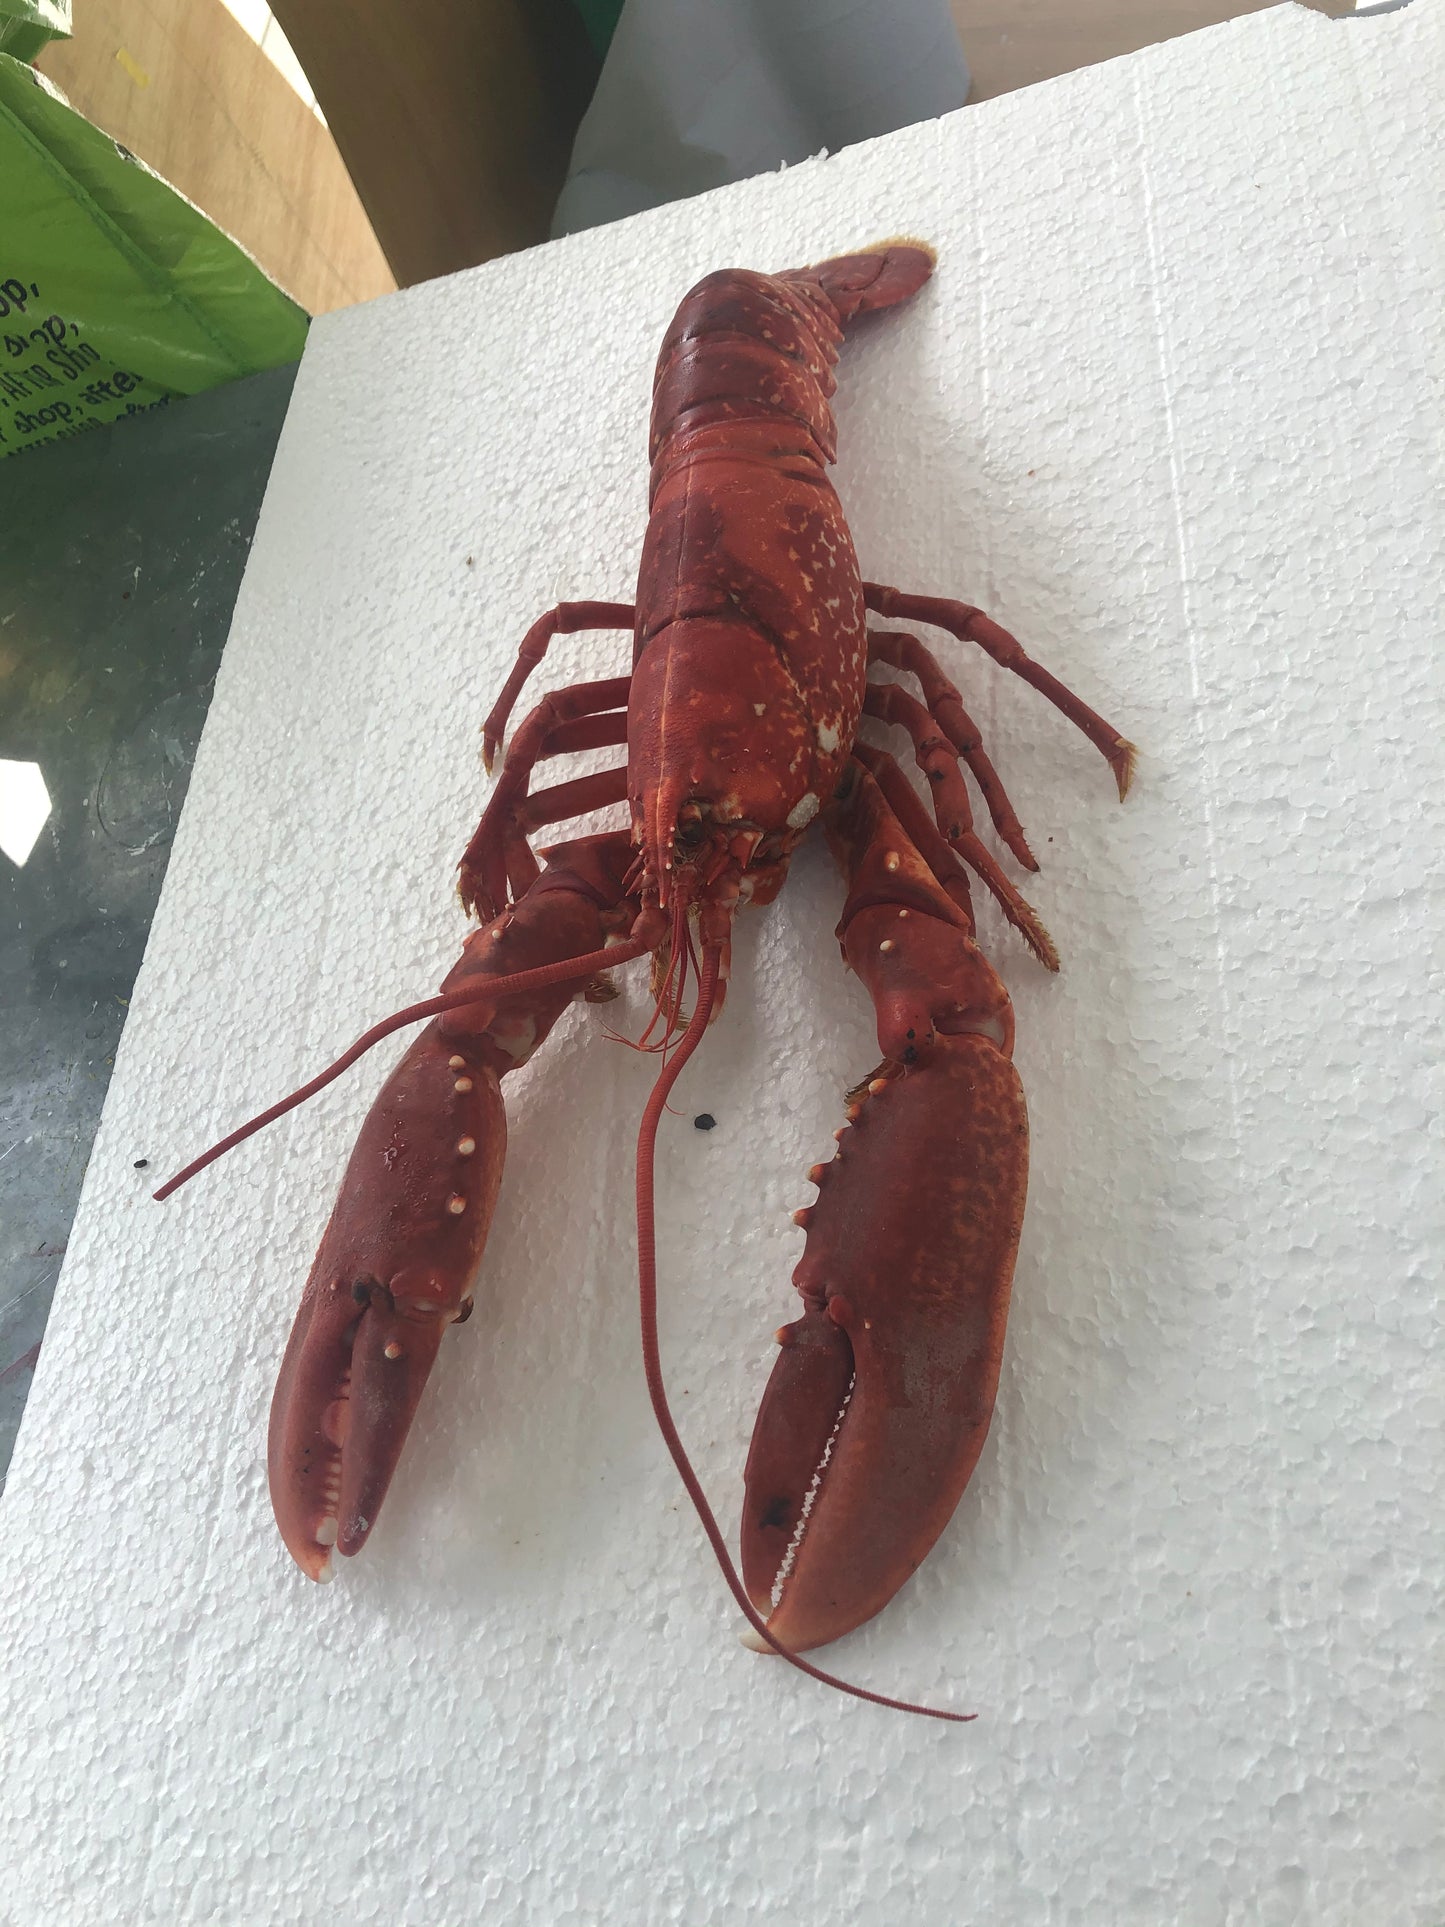 Menai Strait Lobsters, Gyotaku Printed and Wet Mounted.